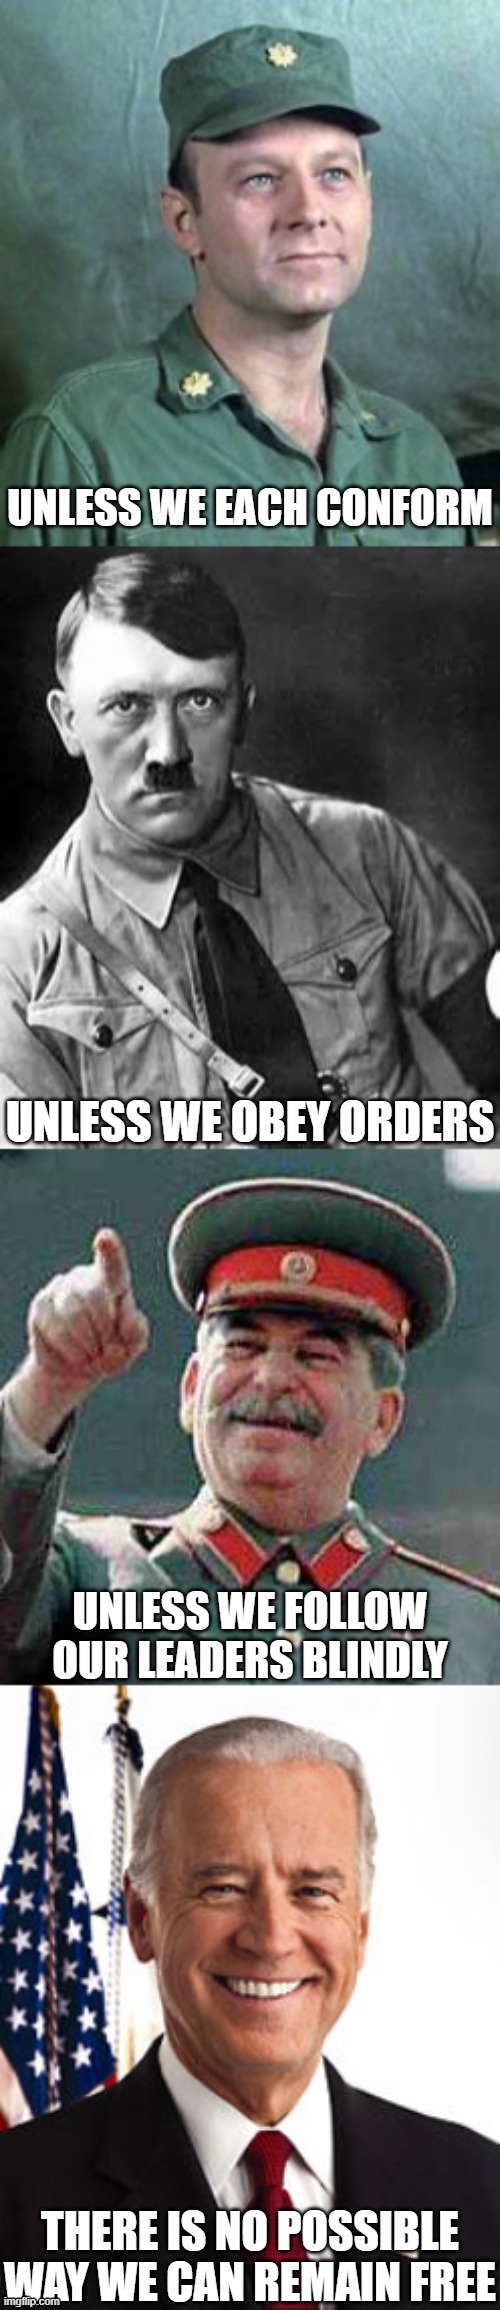 Reposting an old meme | image tagged in mash,stalin,hitler | made w/ Imgflip meme maker